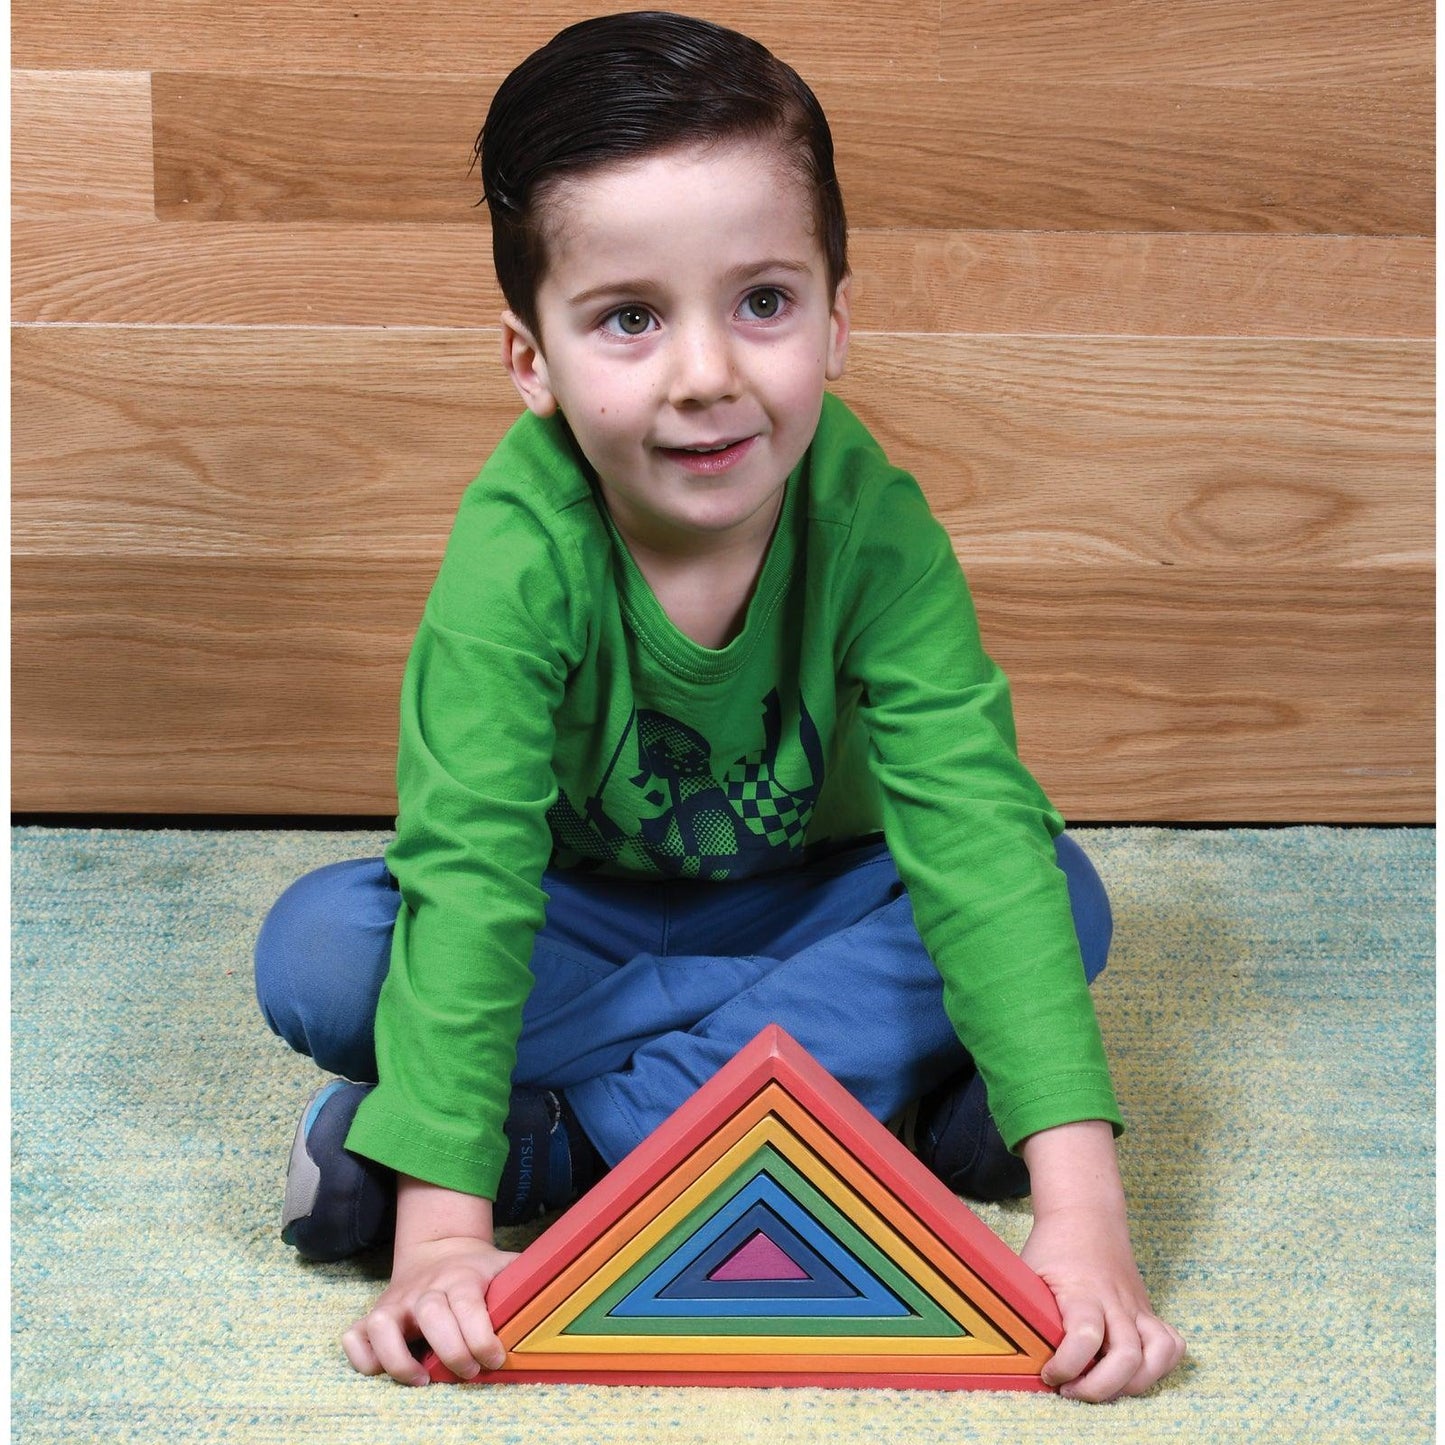 Wooden Rainbow Architect Triangles - Set of 7 - Loomini